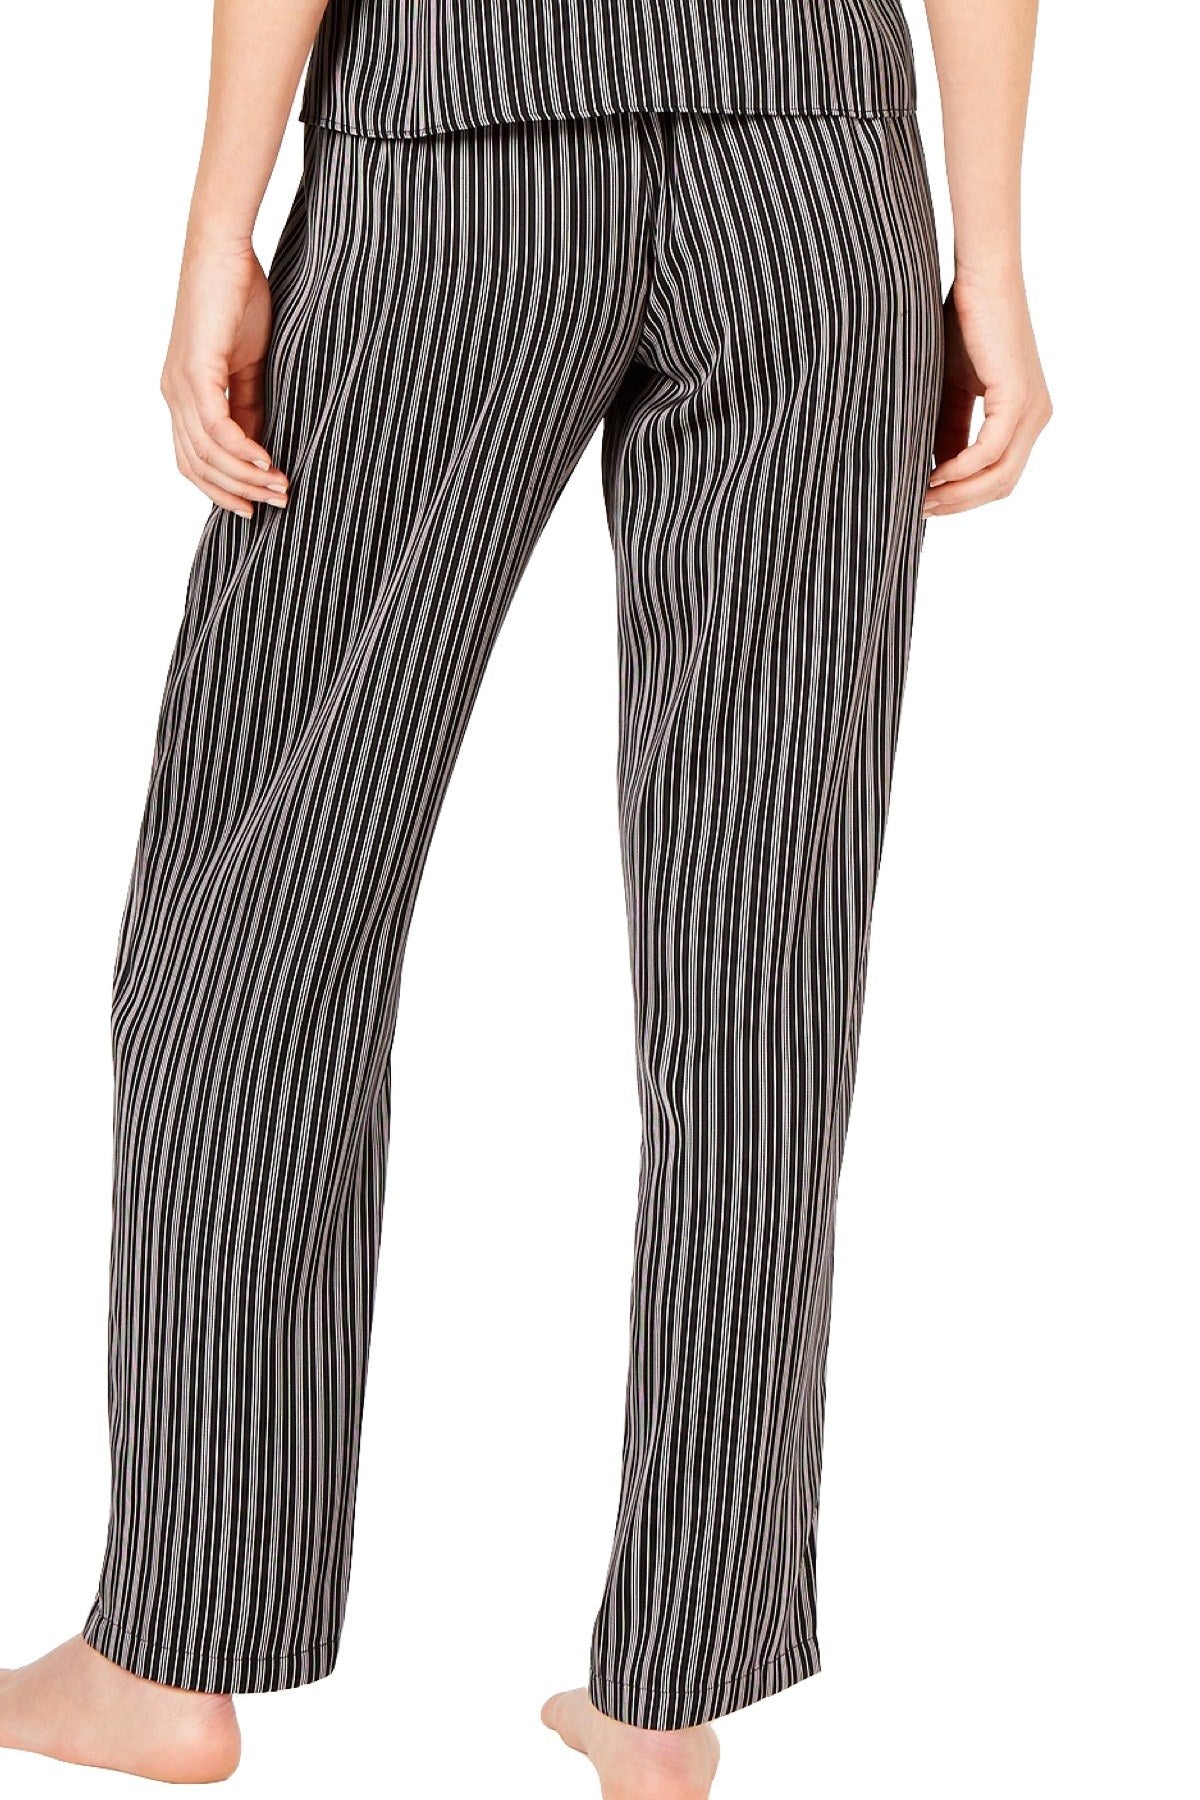 INC International Concepts Striped Satin Pajama Pant in Black